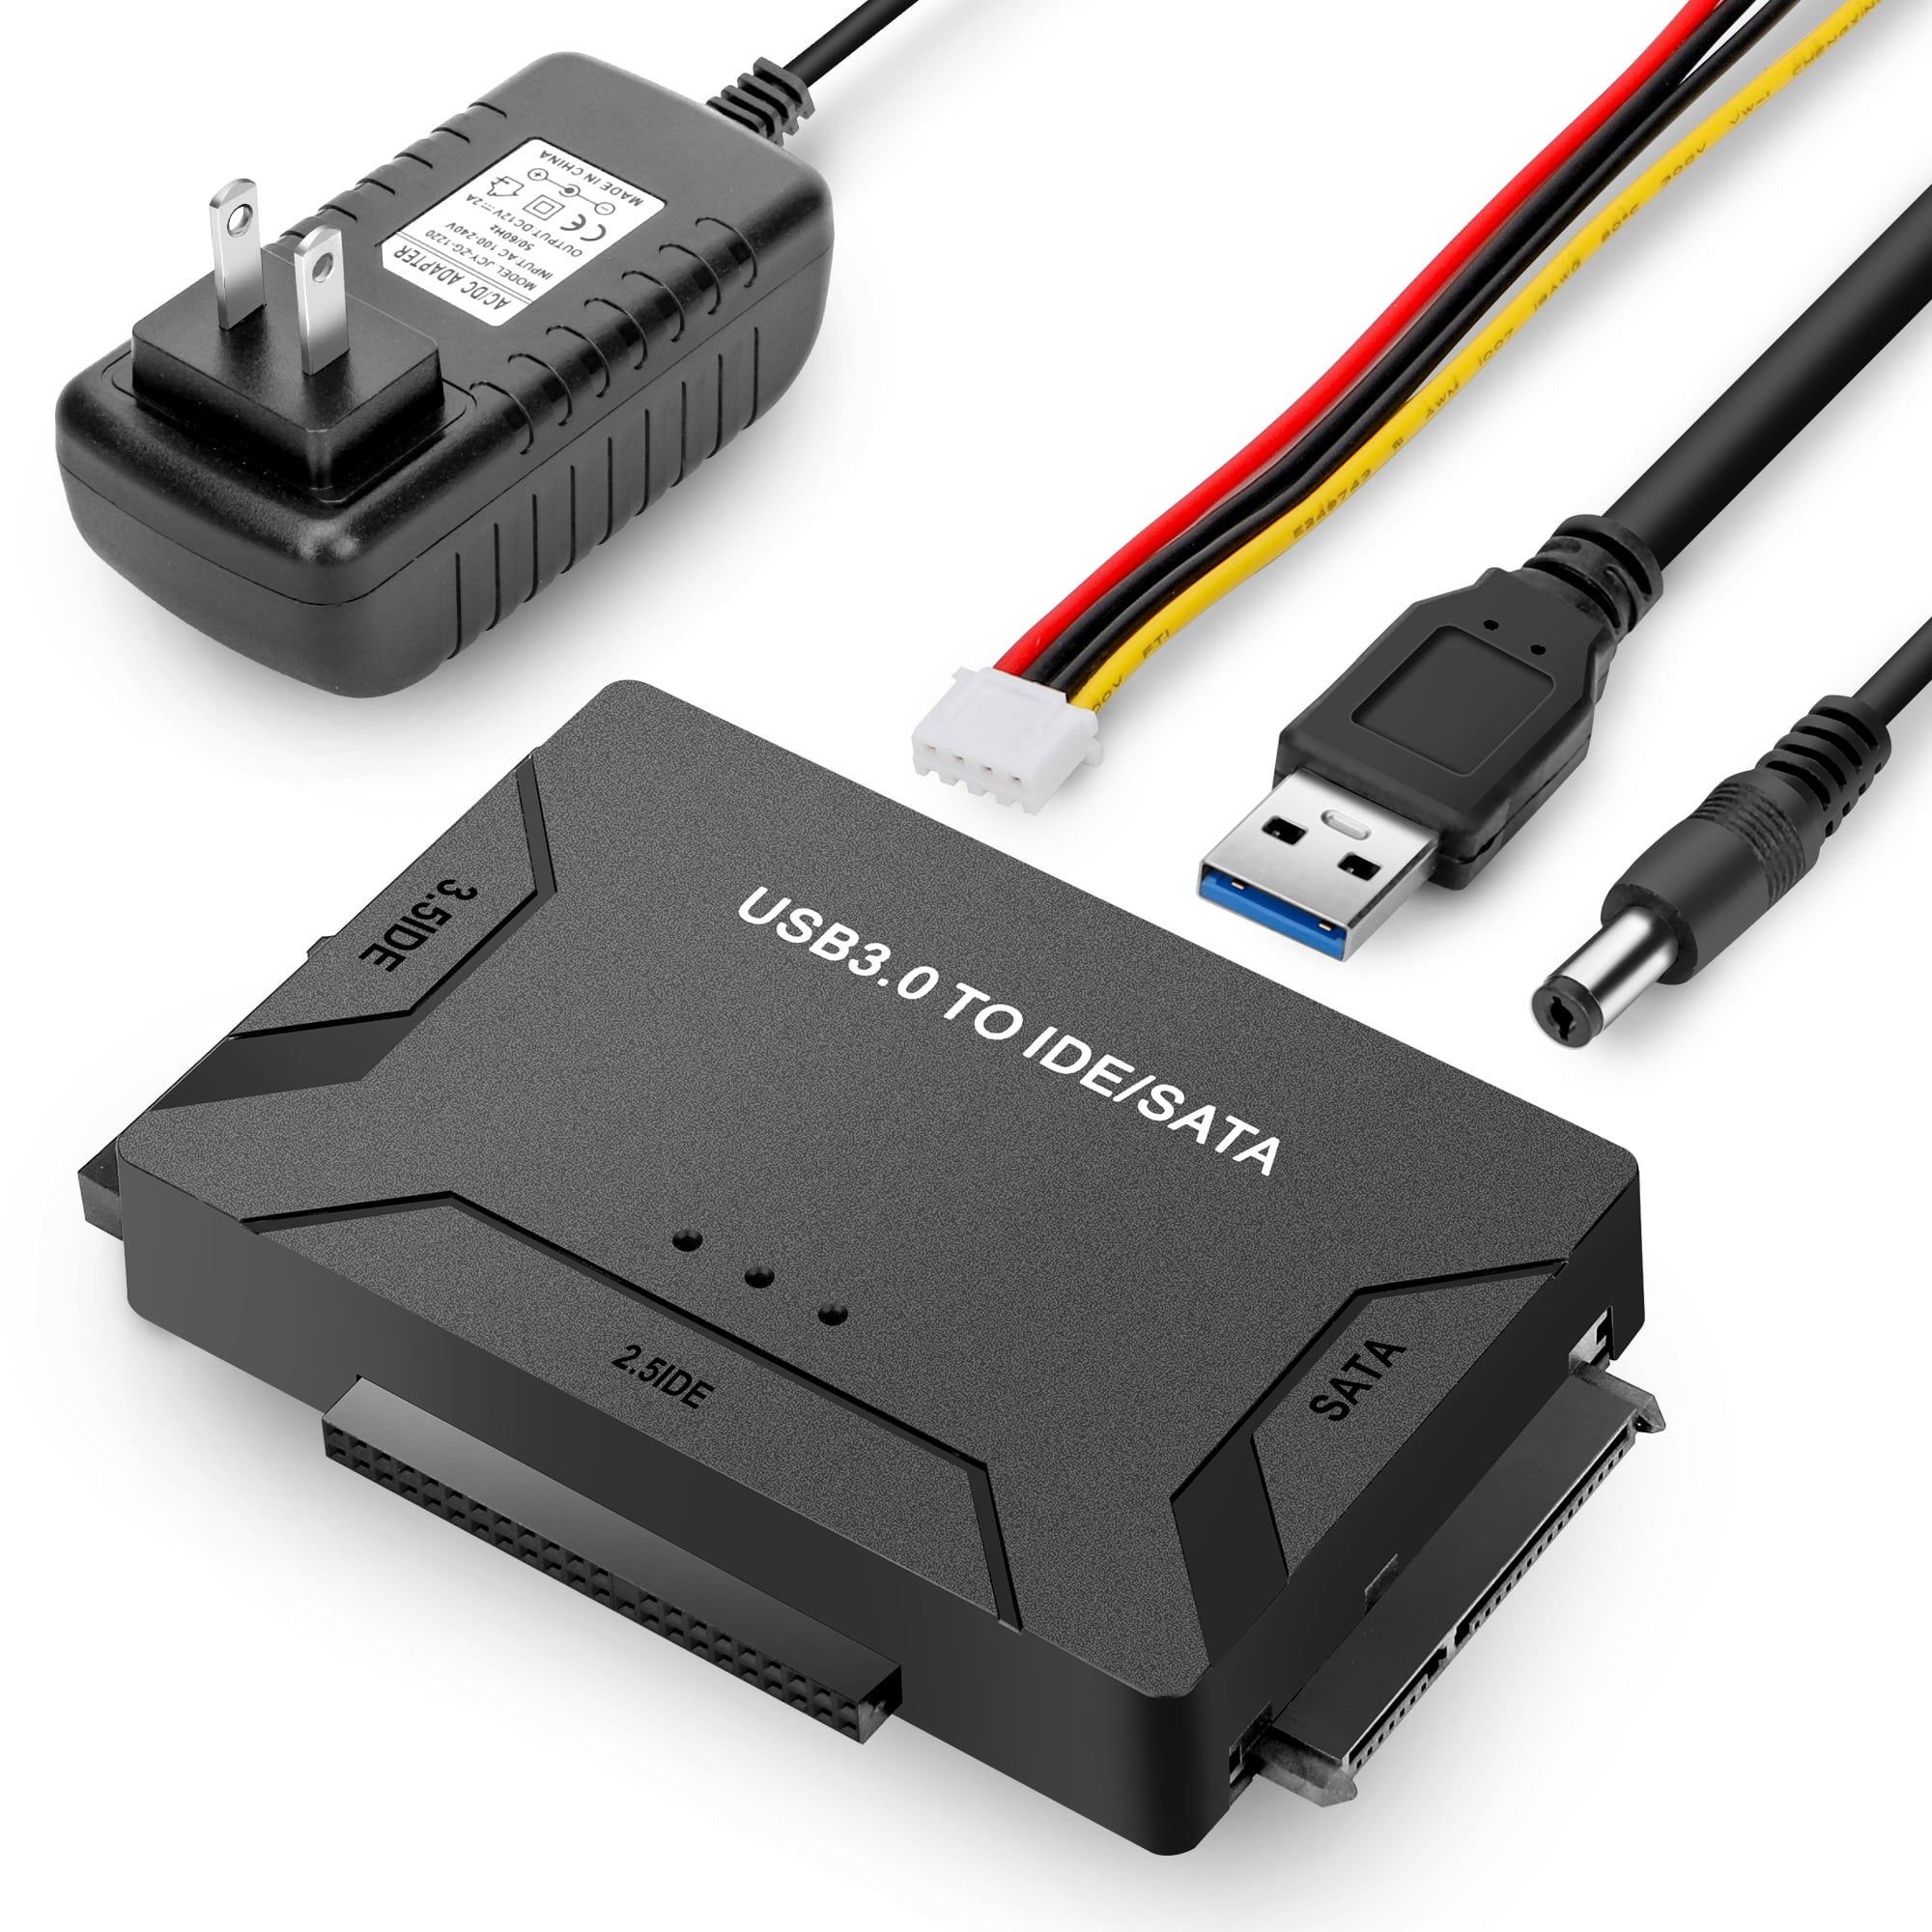 USB 3.0 to SATA Adapter Cable for 2.5 SATA IDE Hard Drives External  Converter Cable Combo for 2.5/3.5 DE SATA SSD Hard Drives Disks